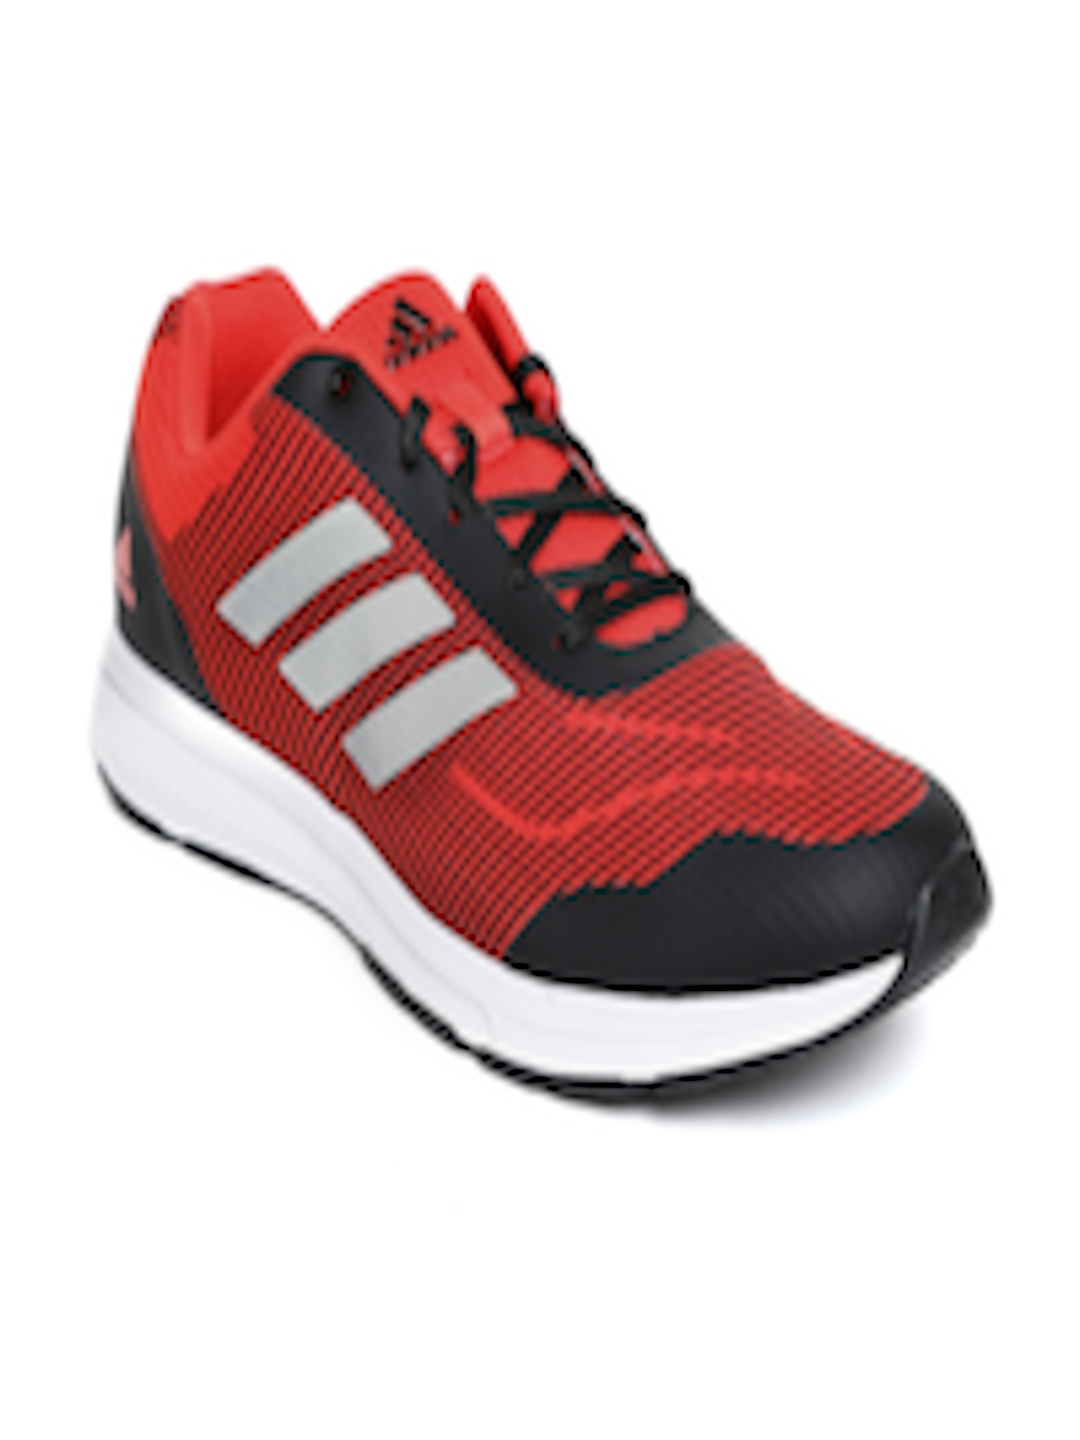 Buy ADIDAS Men Red & Black RADDIS Running Shoes - Sports Shoes for Men